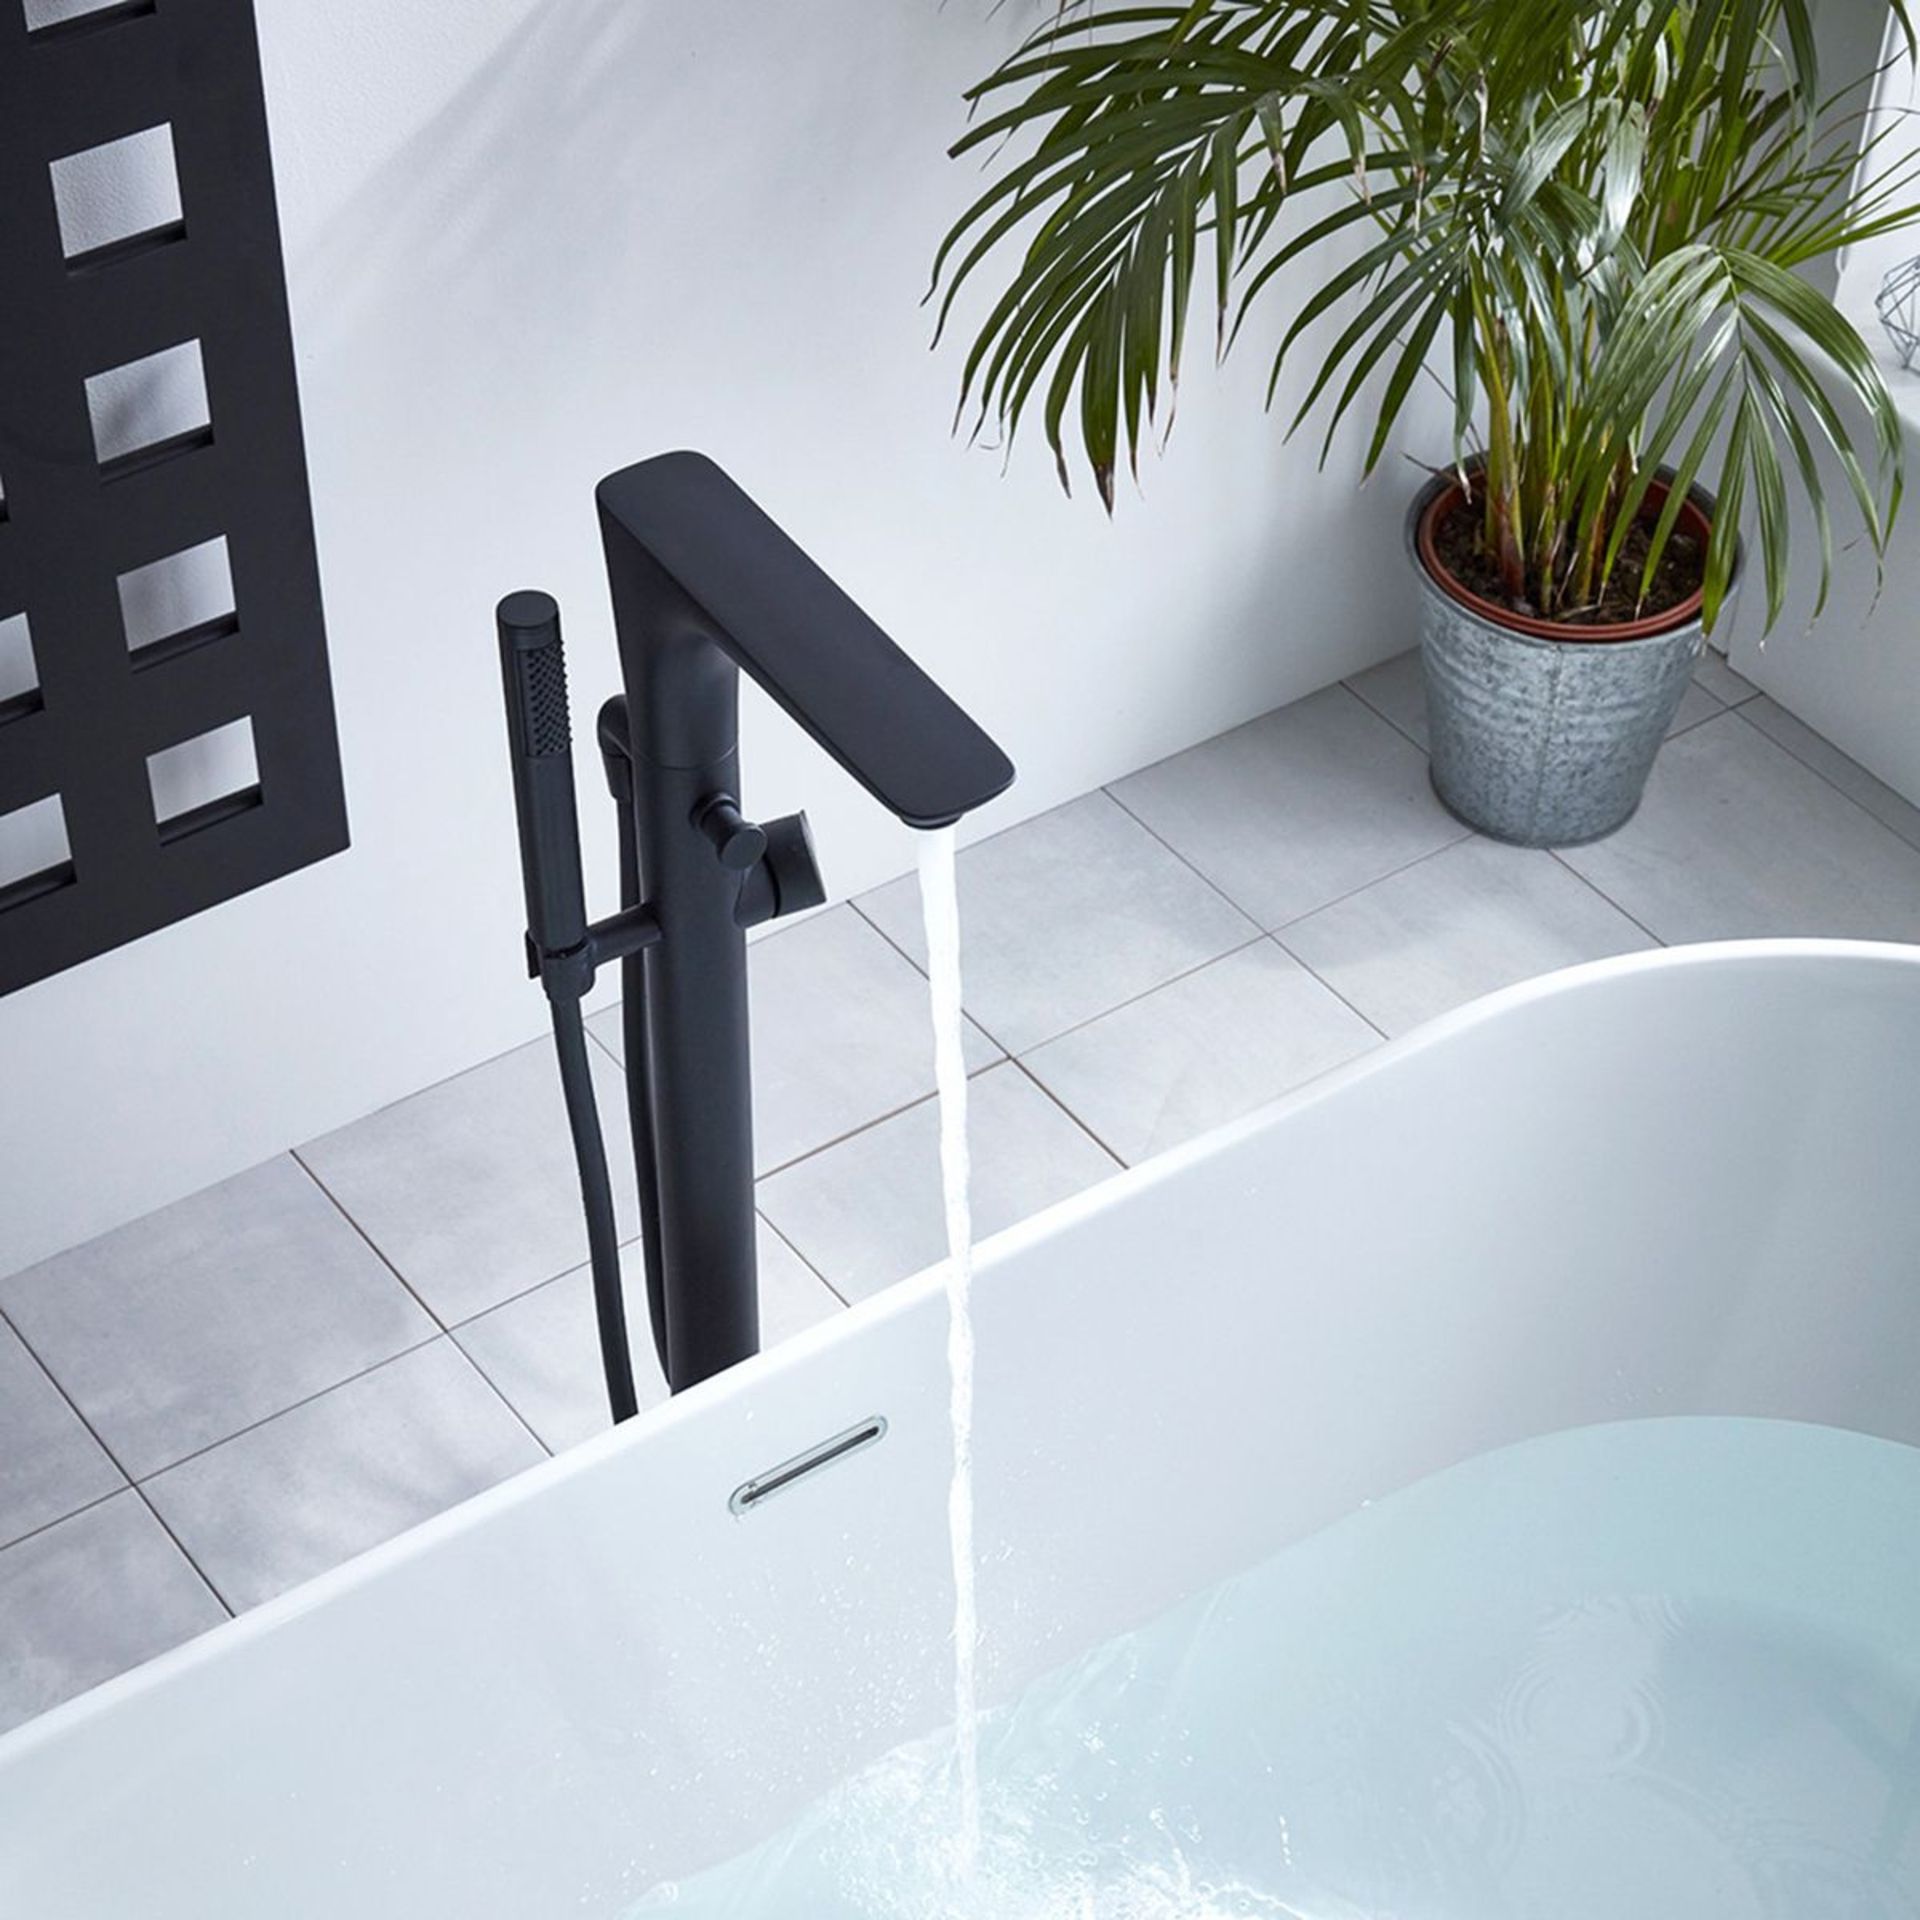 NEW & BOXED Black Canim Freestanding Bath Mixer Tap & Handheld Shower Head. TB3086B. Construc... - Image 5 of 5